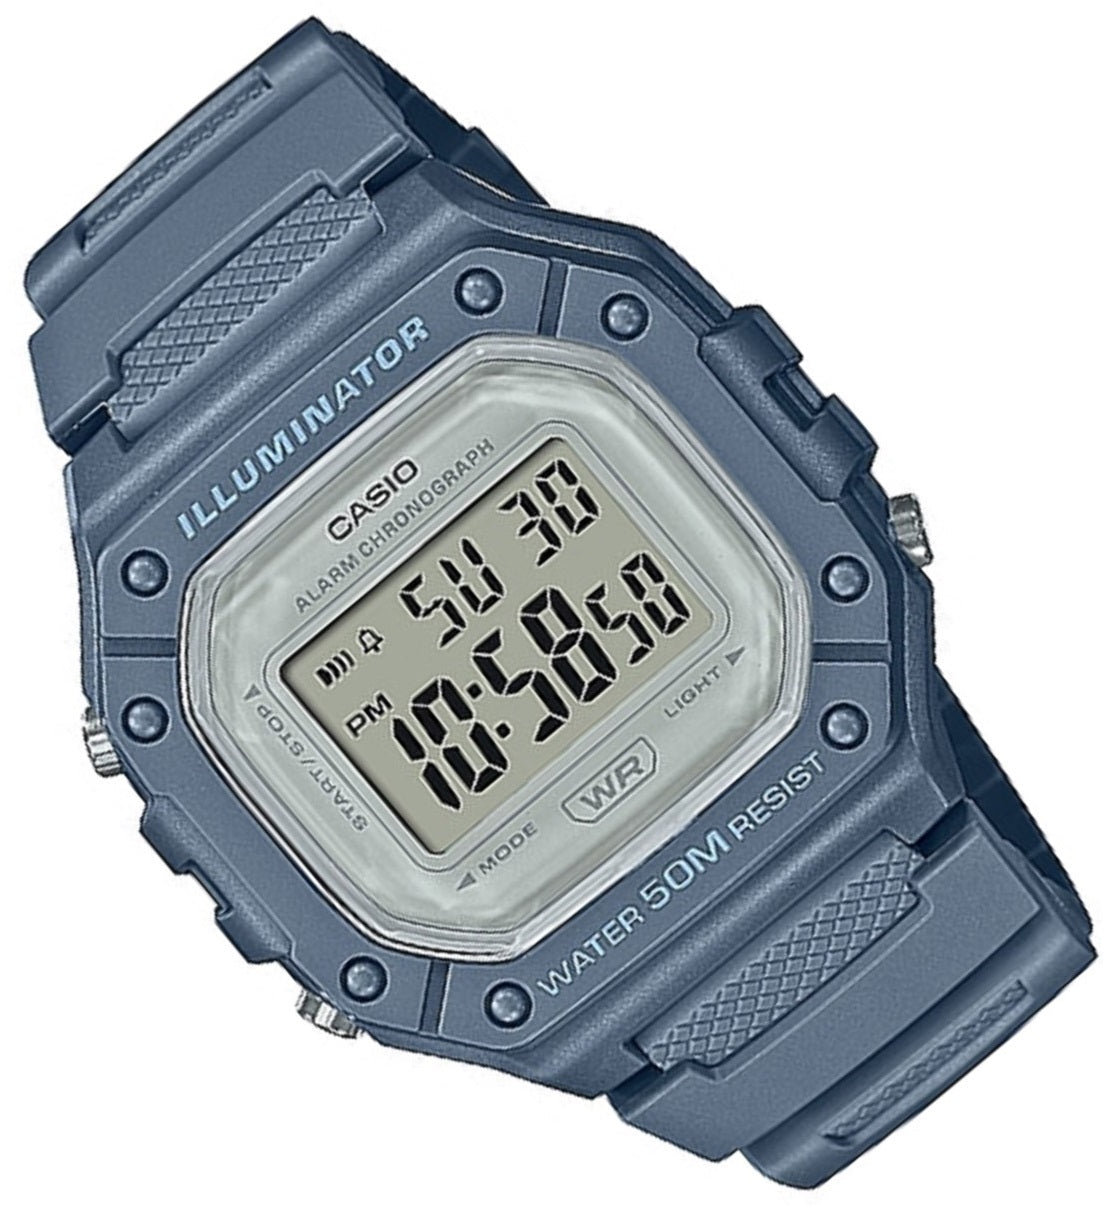 Casio W-218HC-2A Blue Denim Resin Watch-Watch Portal Philippines